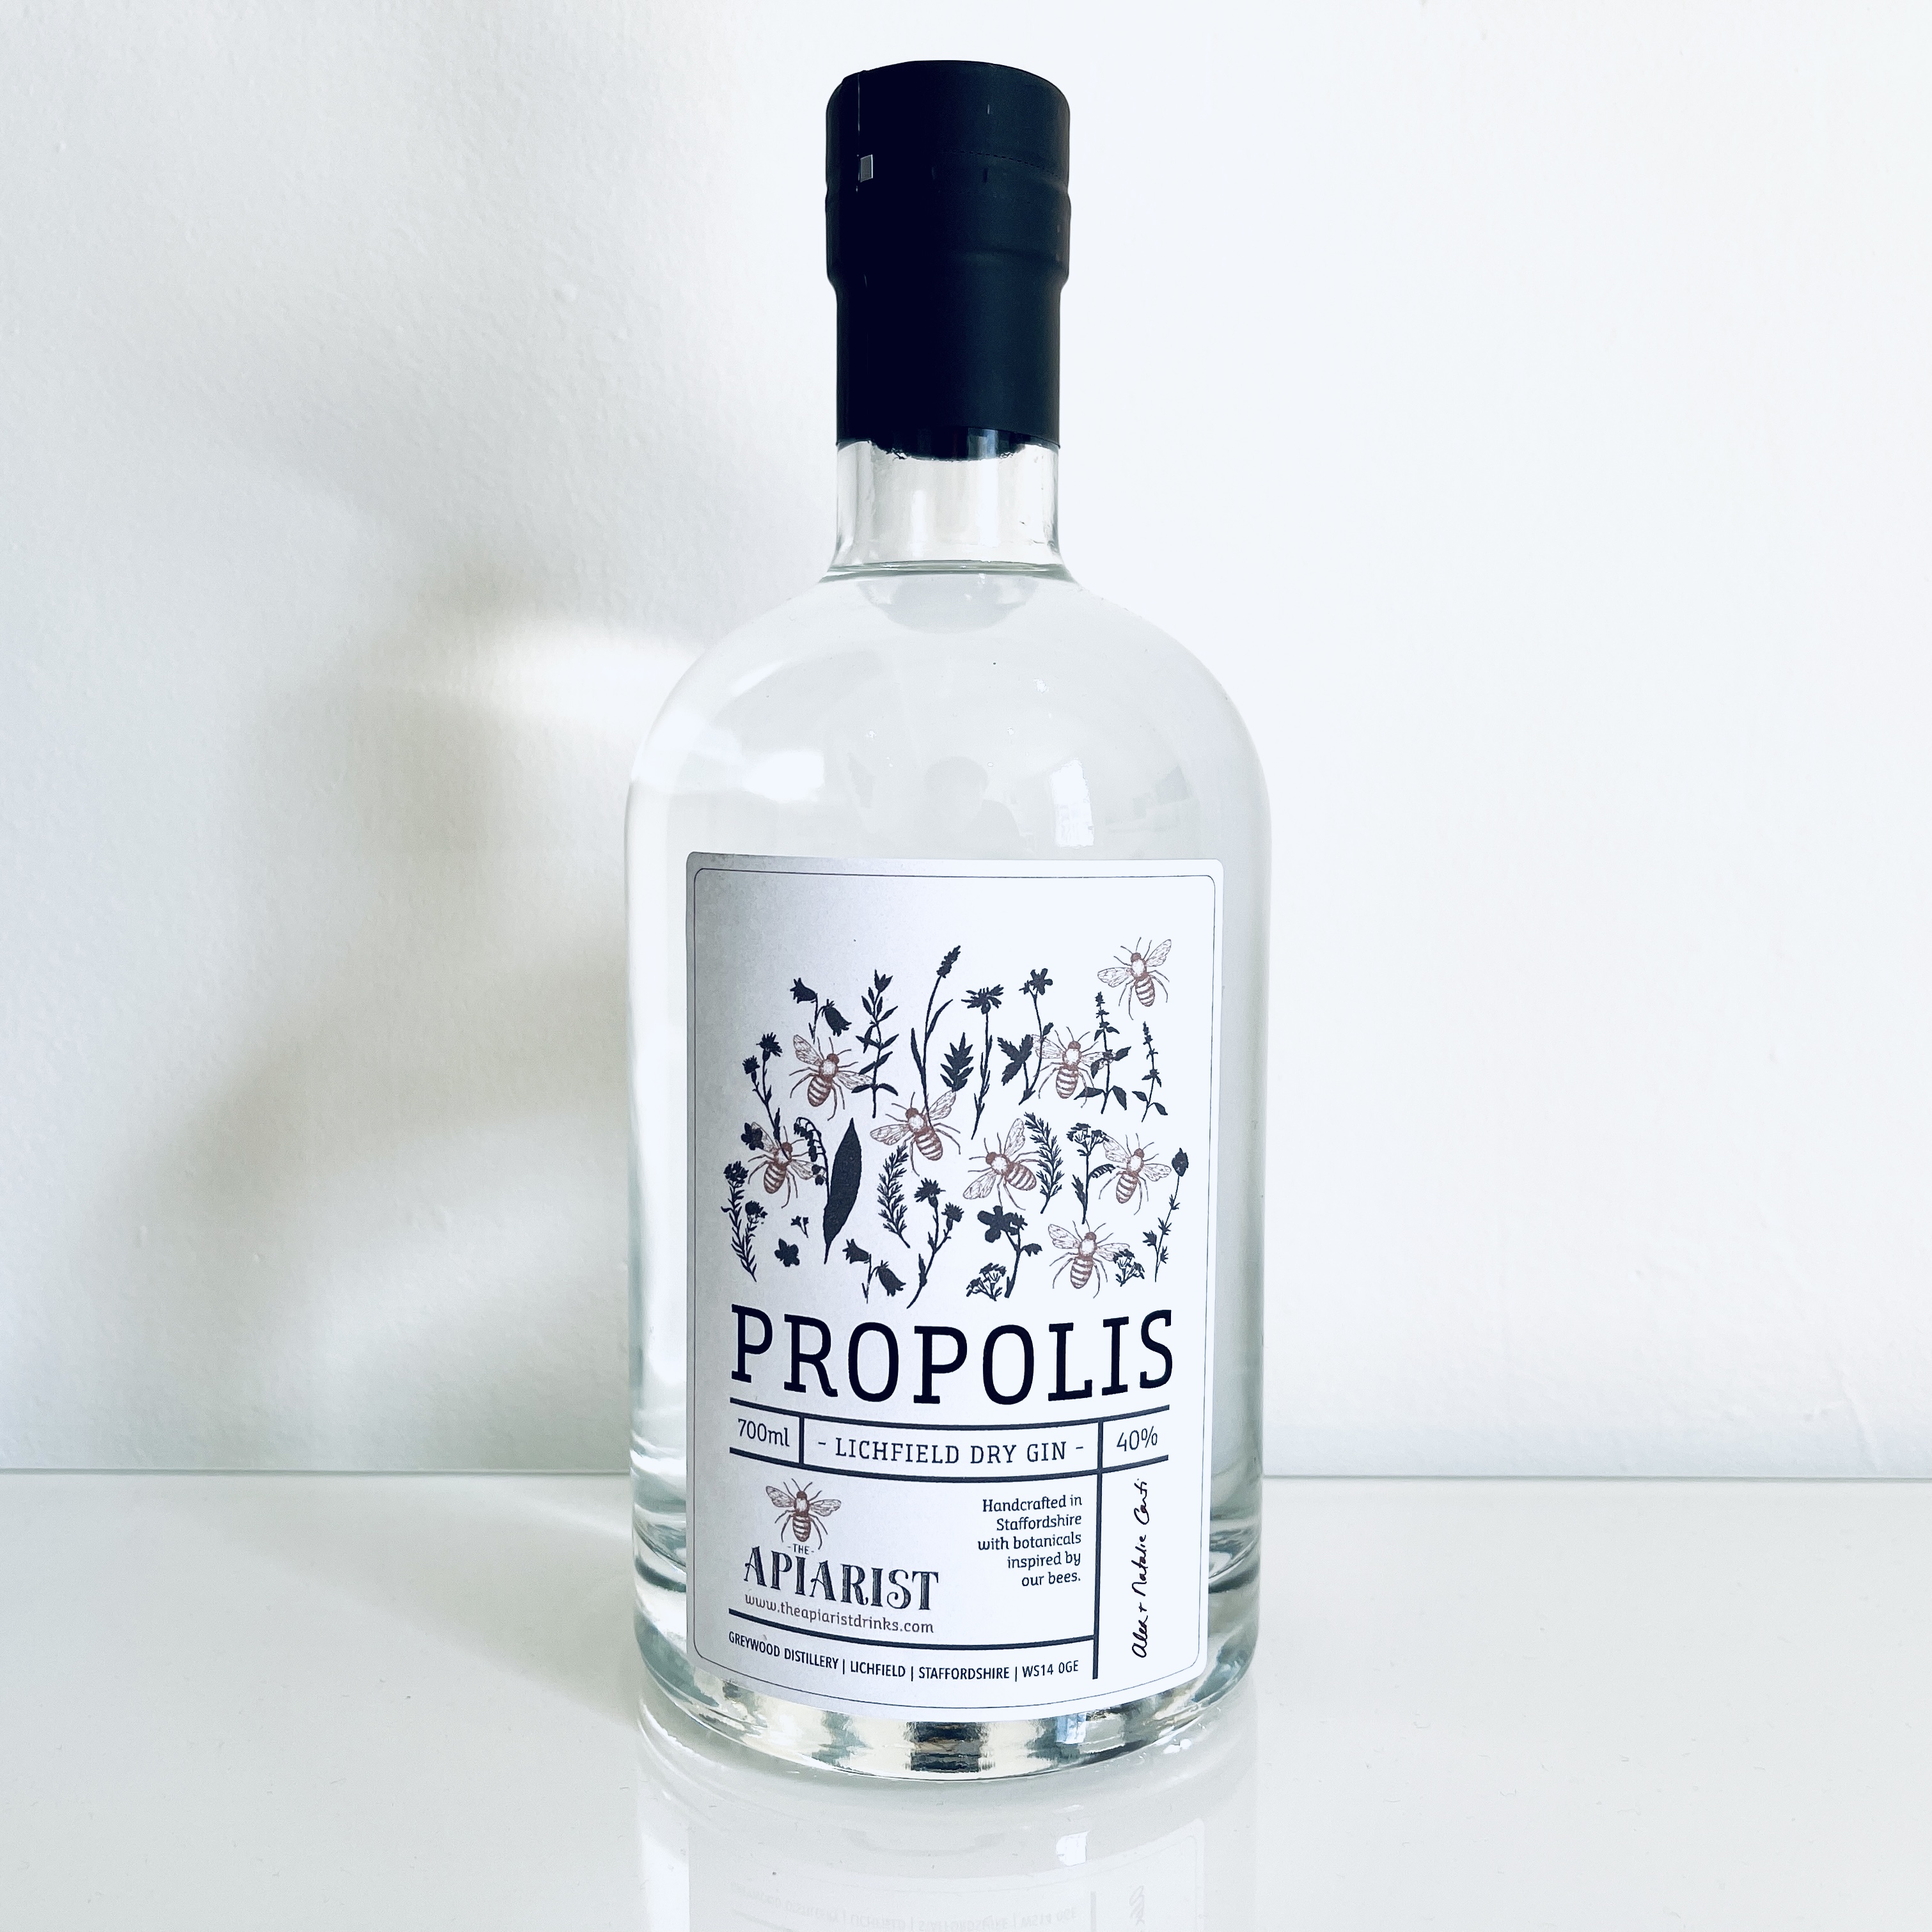 The Apiarist Propolis Gin